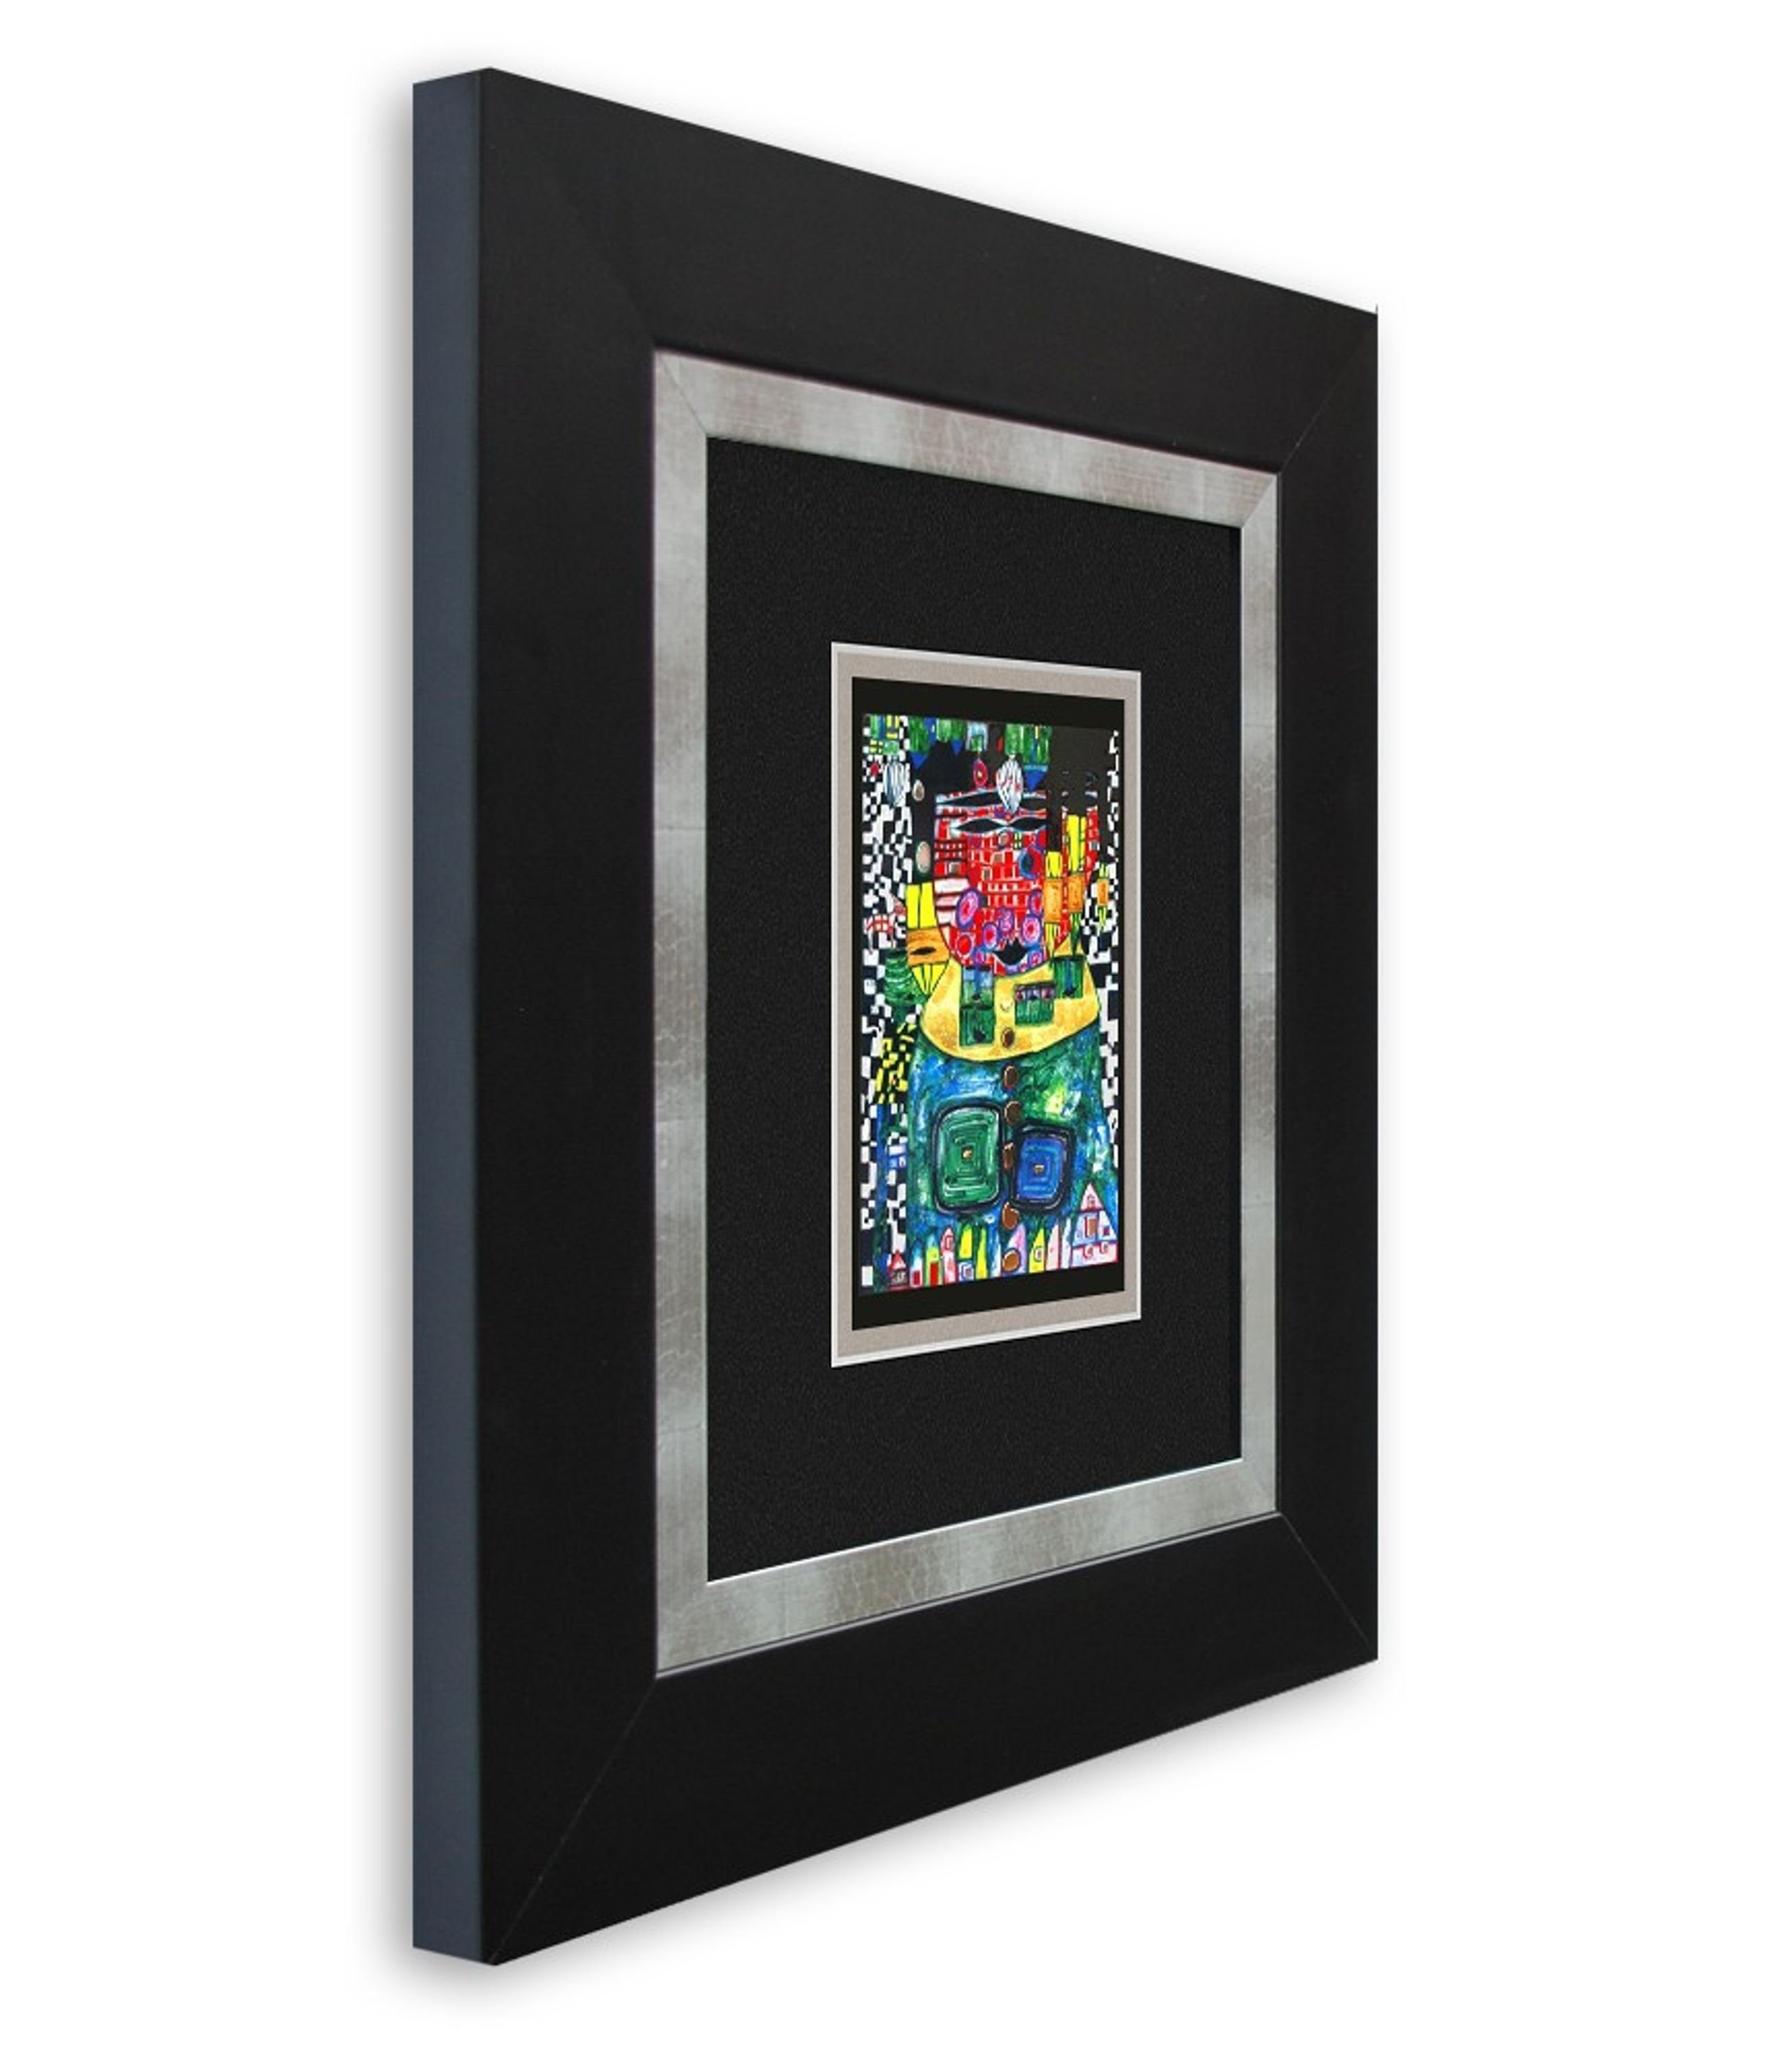 Bild Poster gerahmt mit / Hundertwasser Bild Rahmen mit / / Wandbild artissimo 40x45cm Rahmen